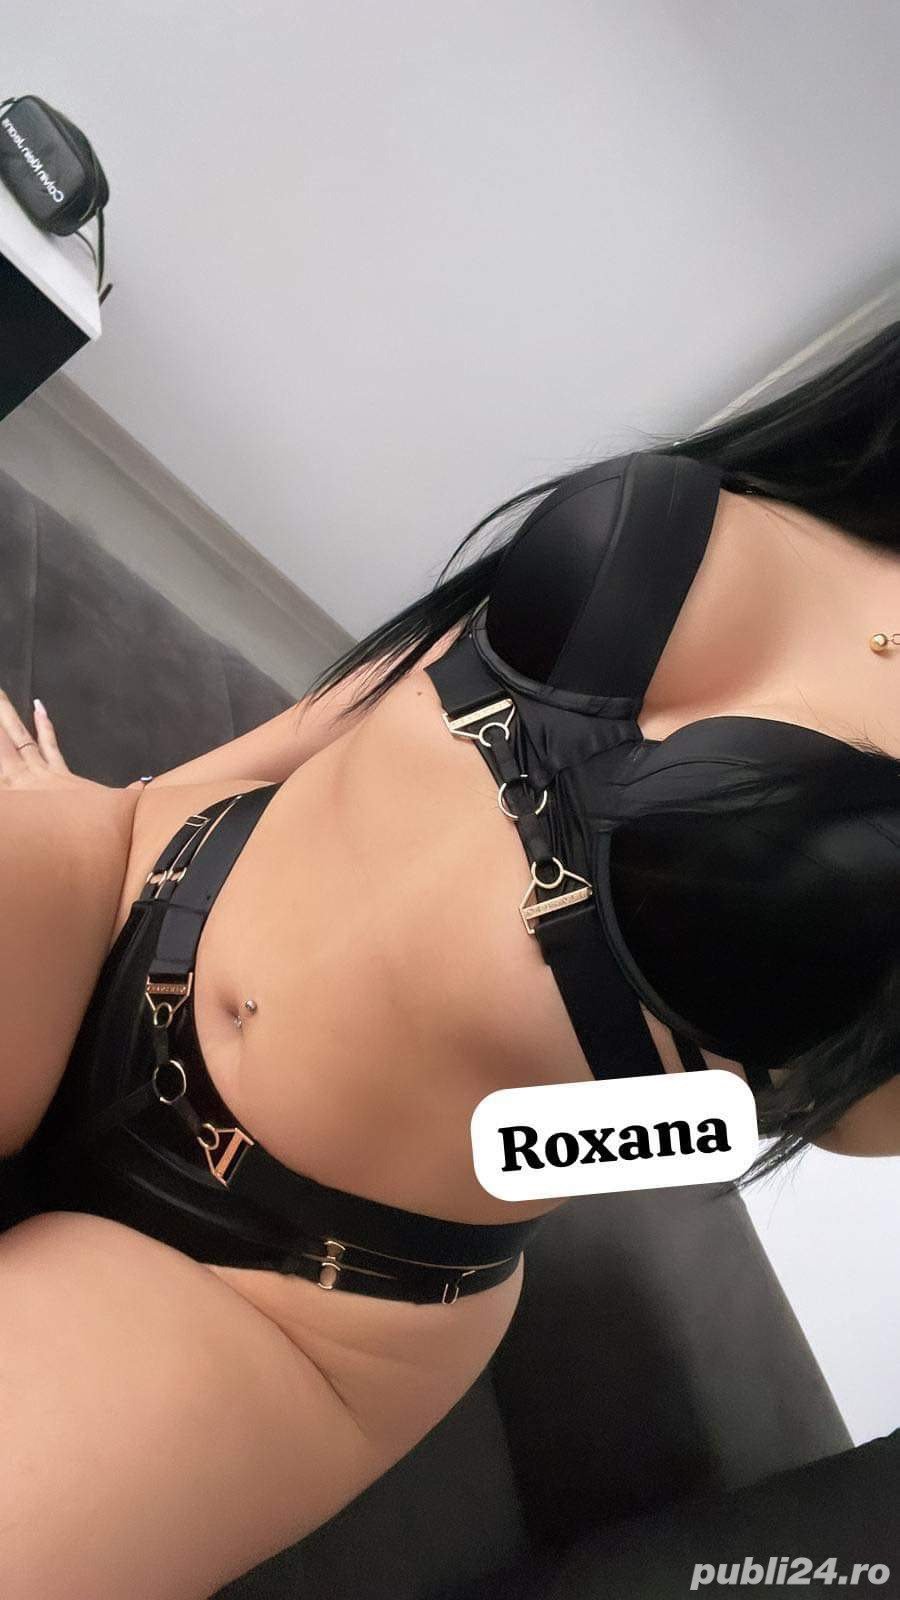 Roxana 100% profil REAL  - imagine 3